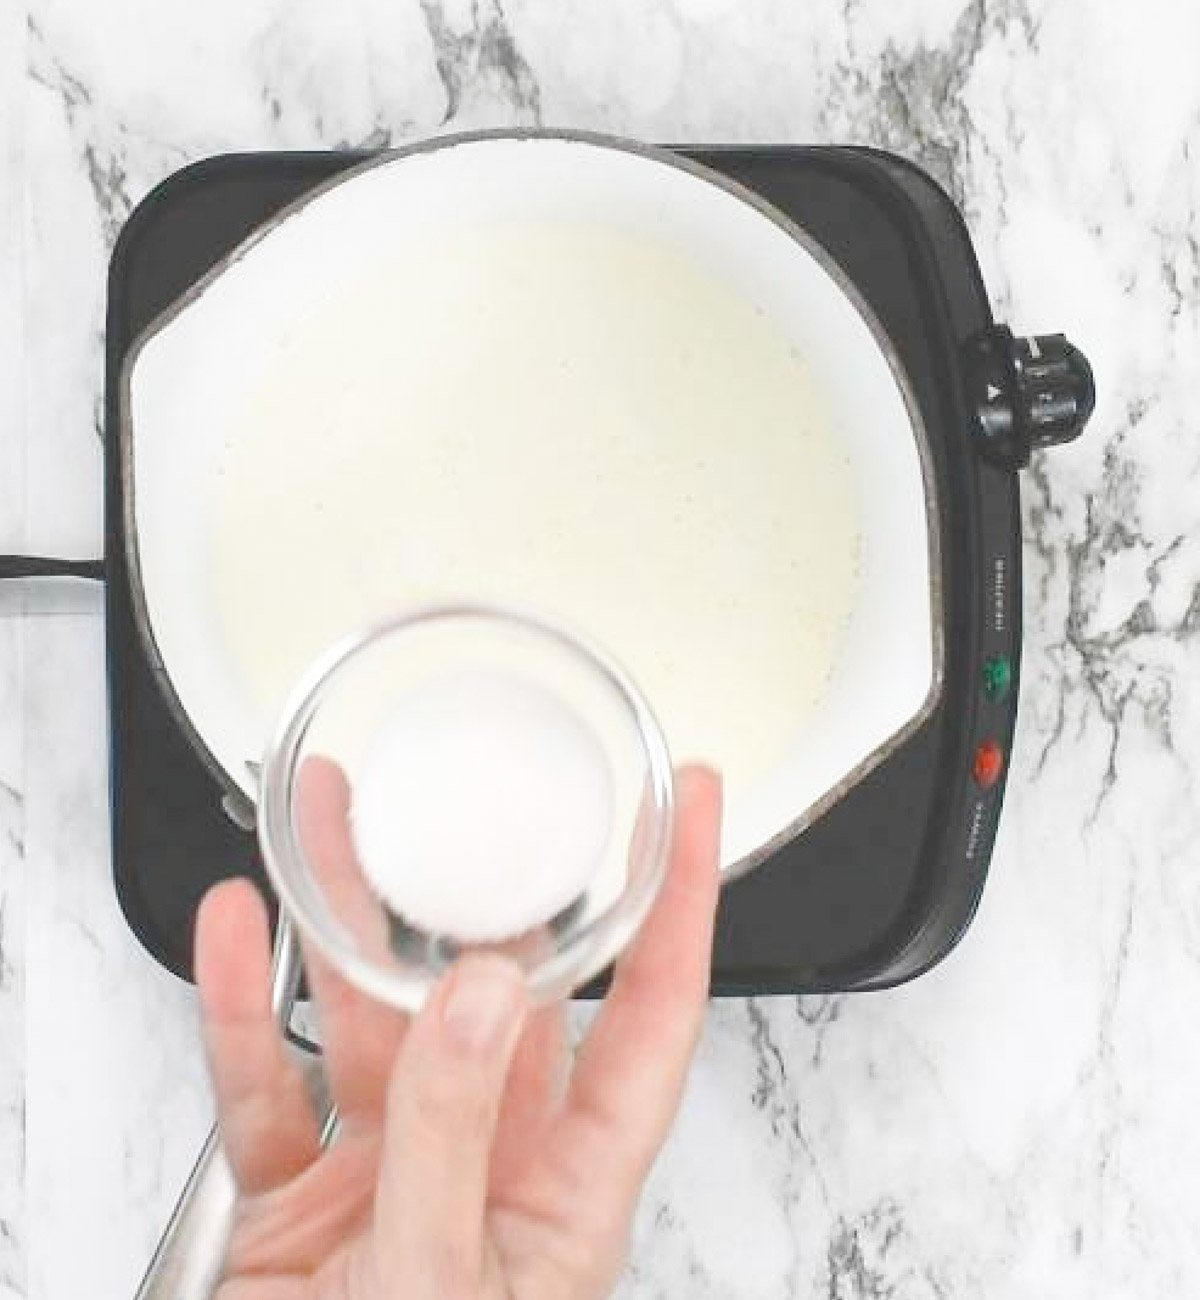 Adding sugar to hot cream in the saucepan